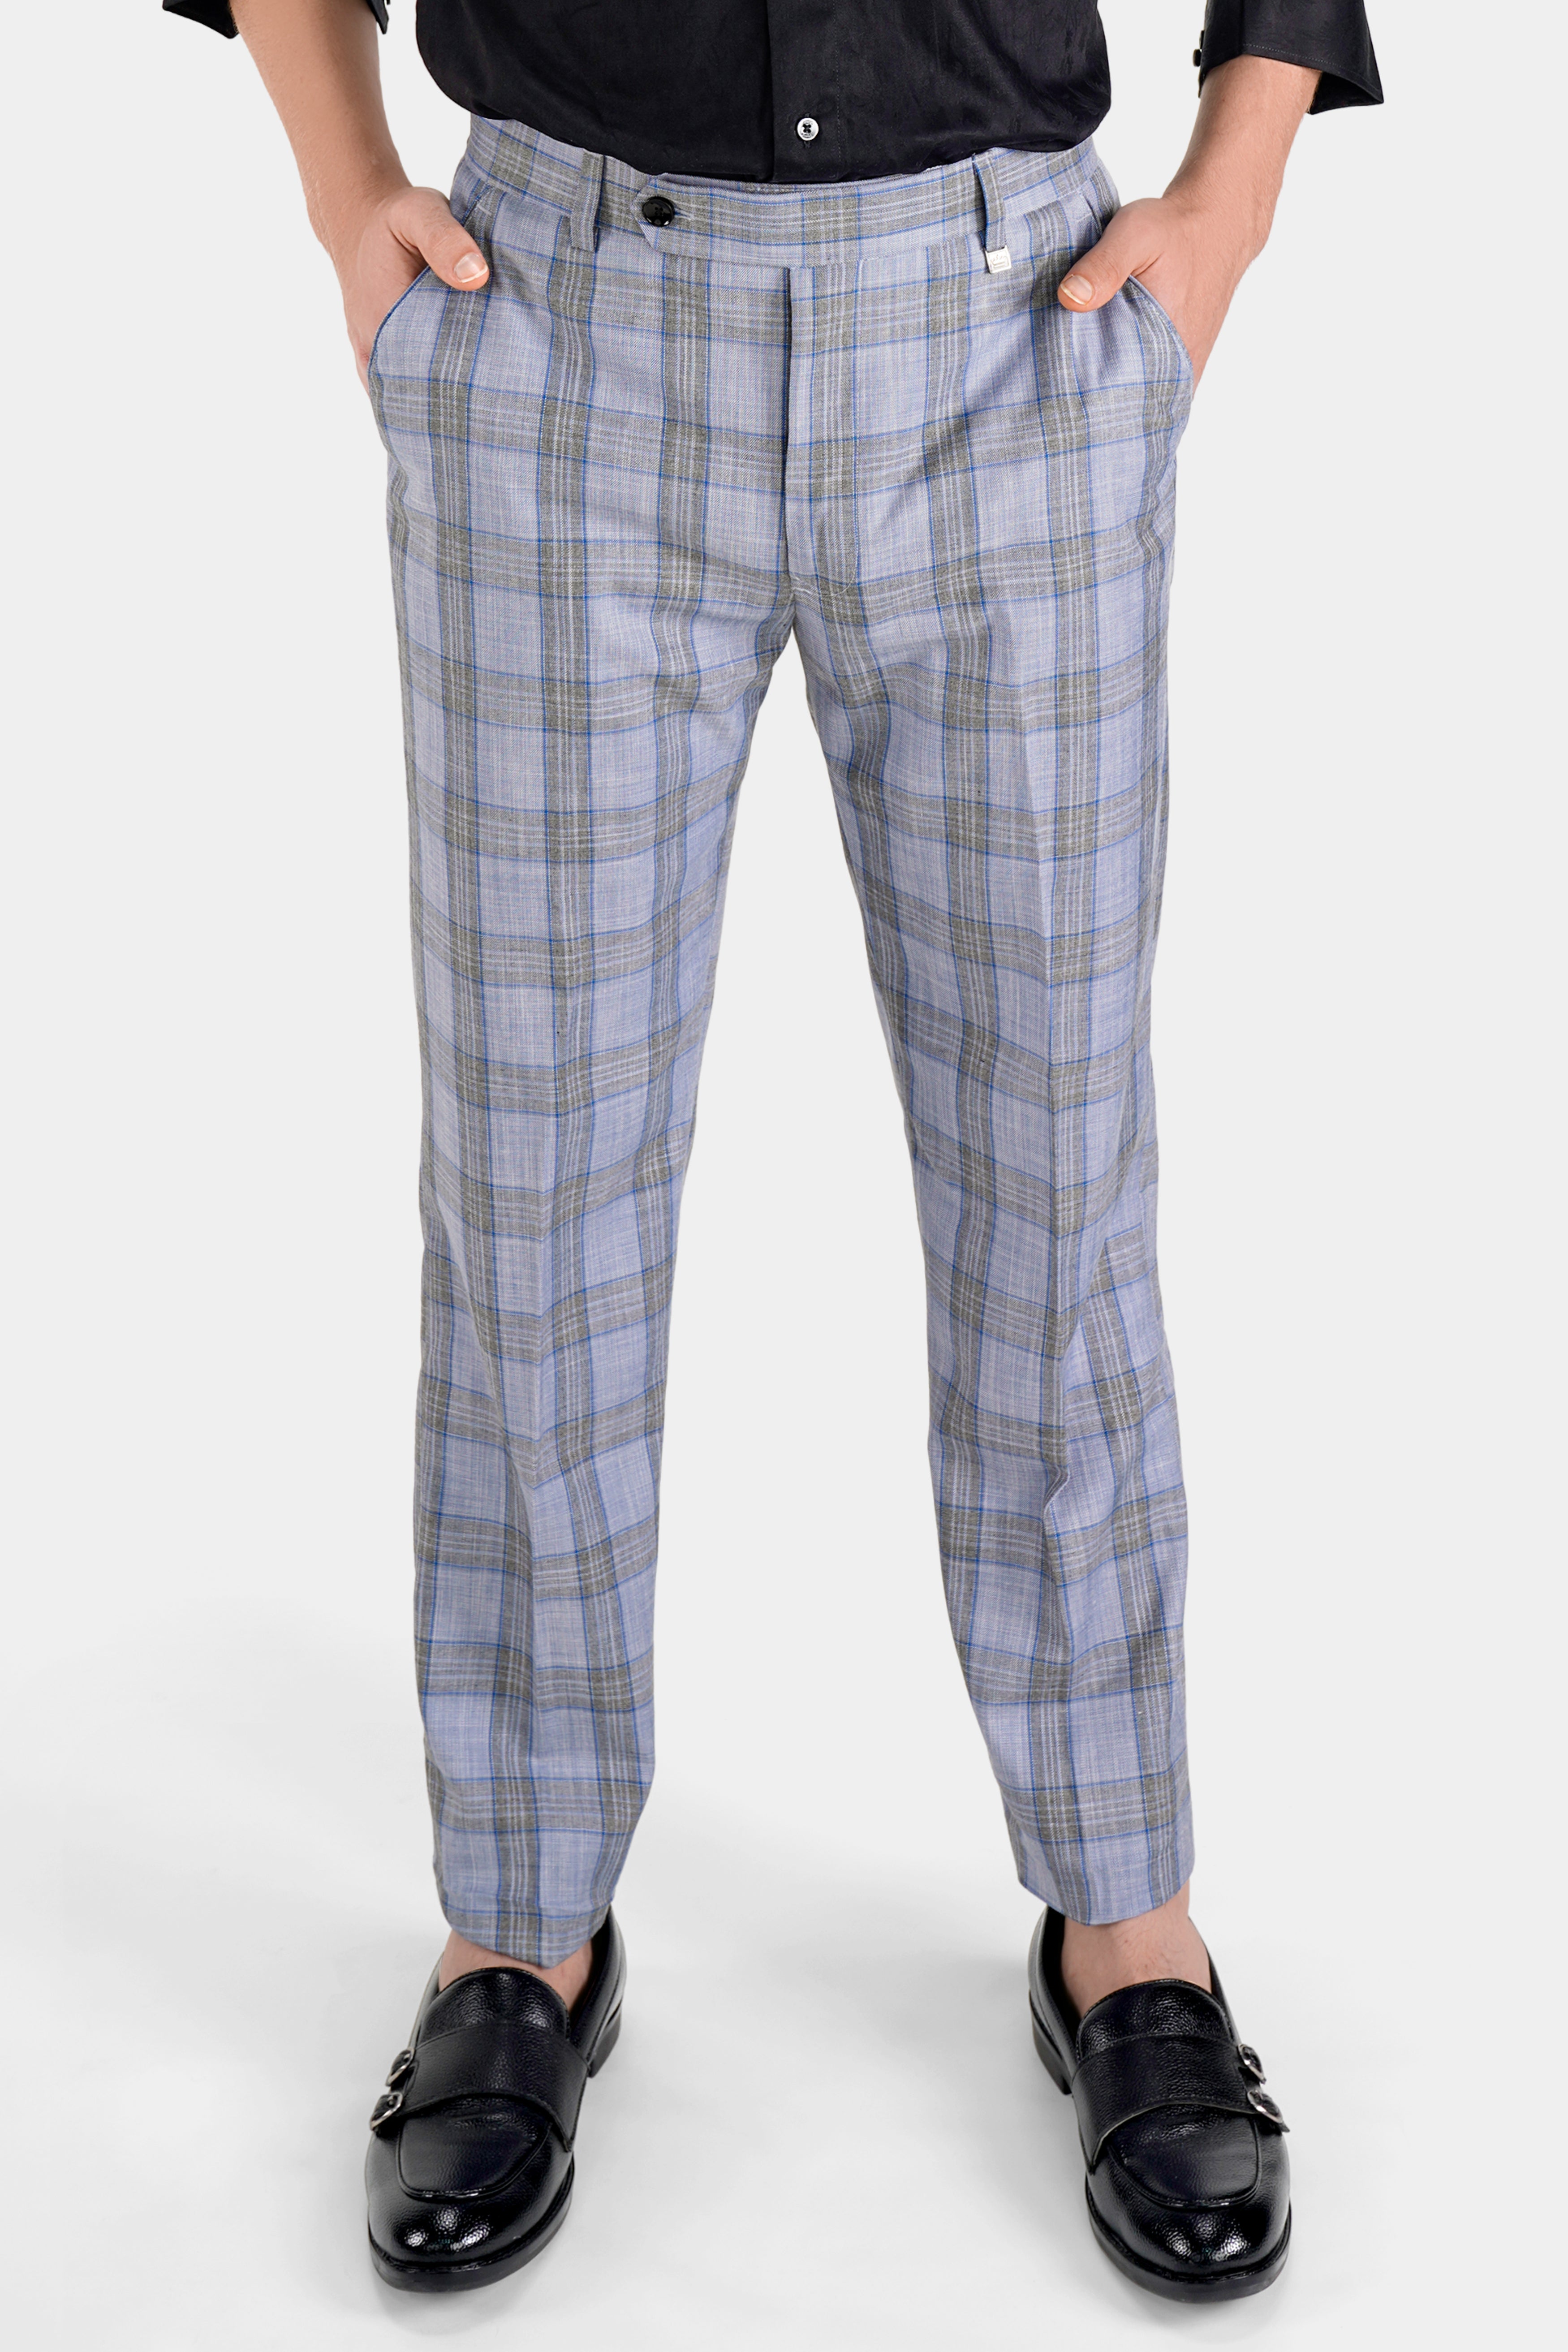 Trenton Gray Plaid Slim-Fit Pants | Grey pants outfit, Slim fit pants,  Workout pants